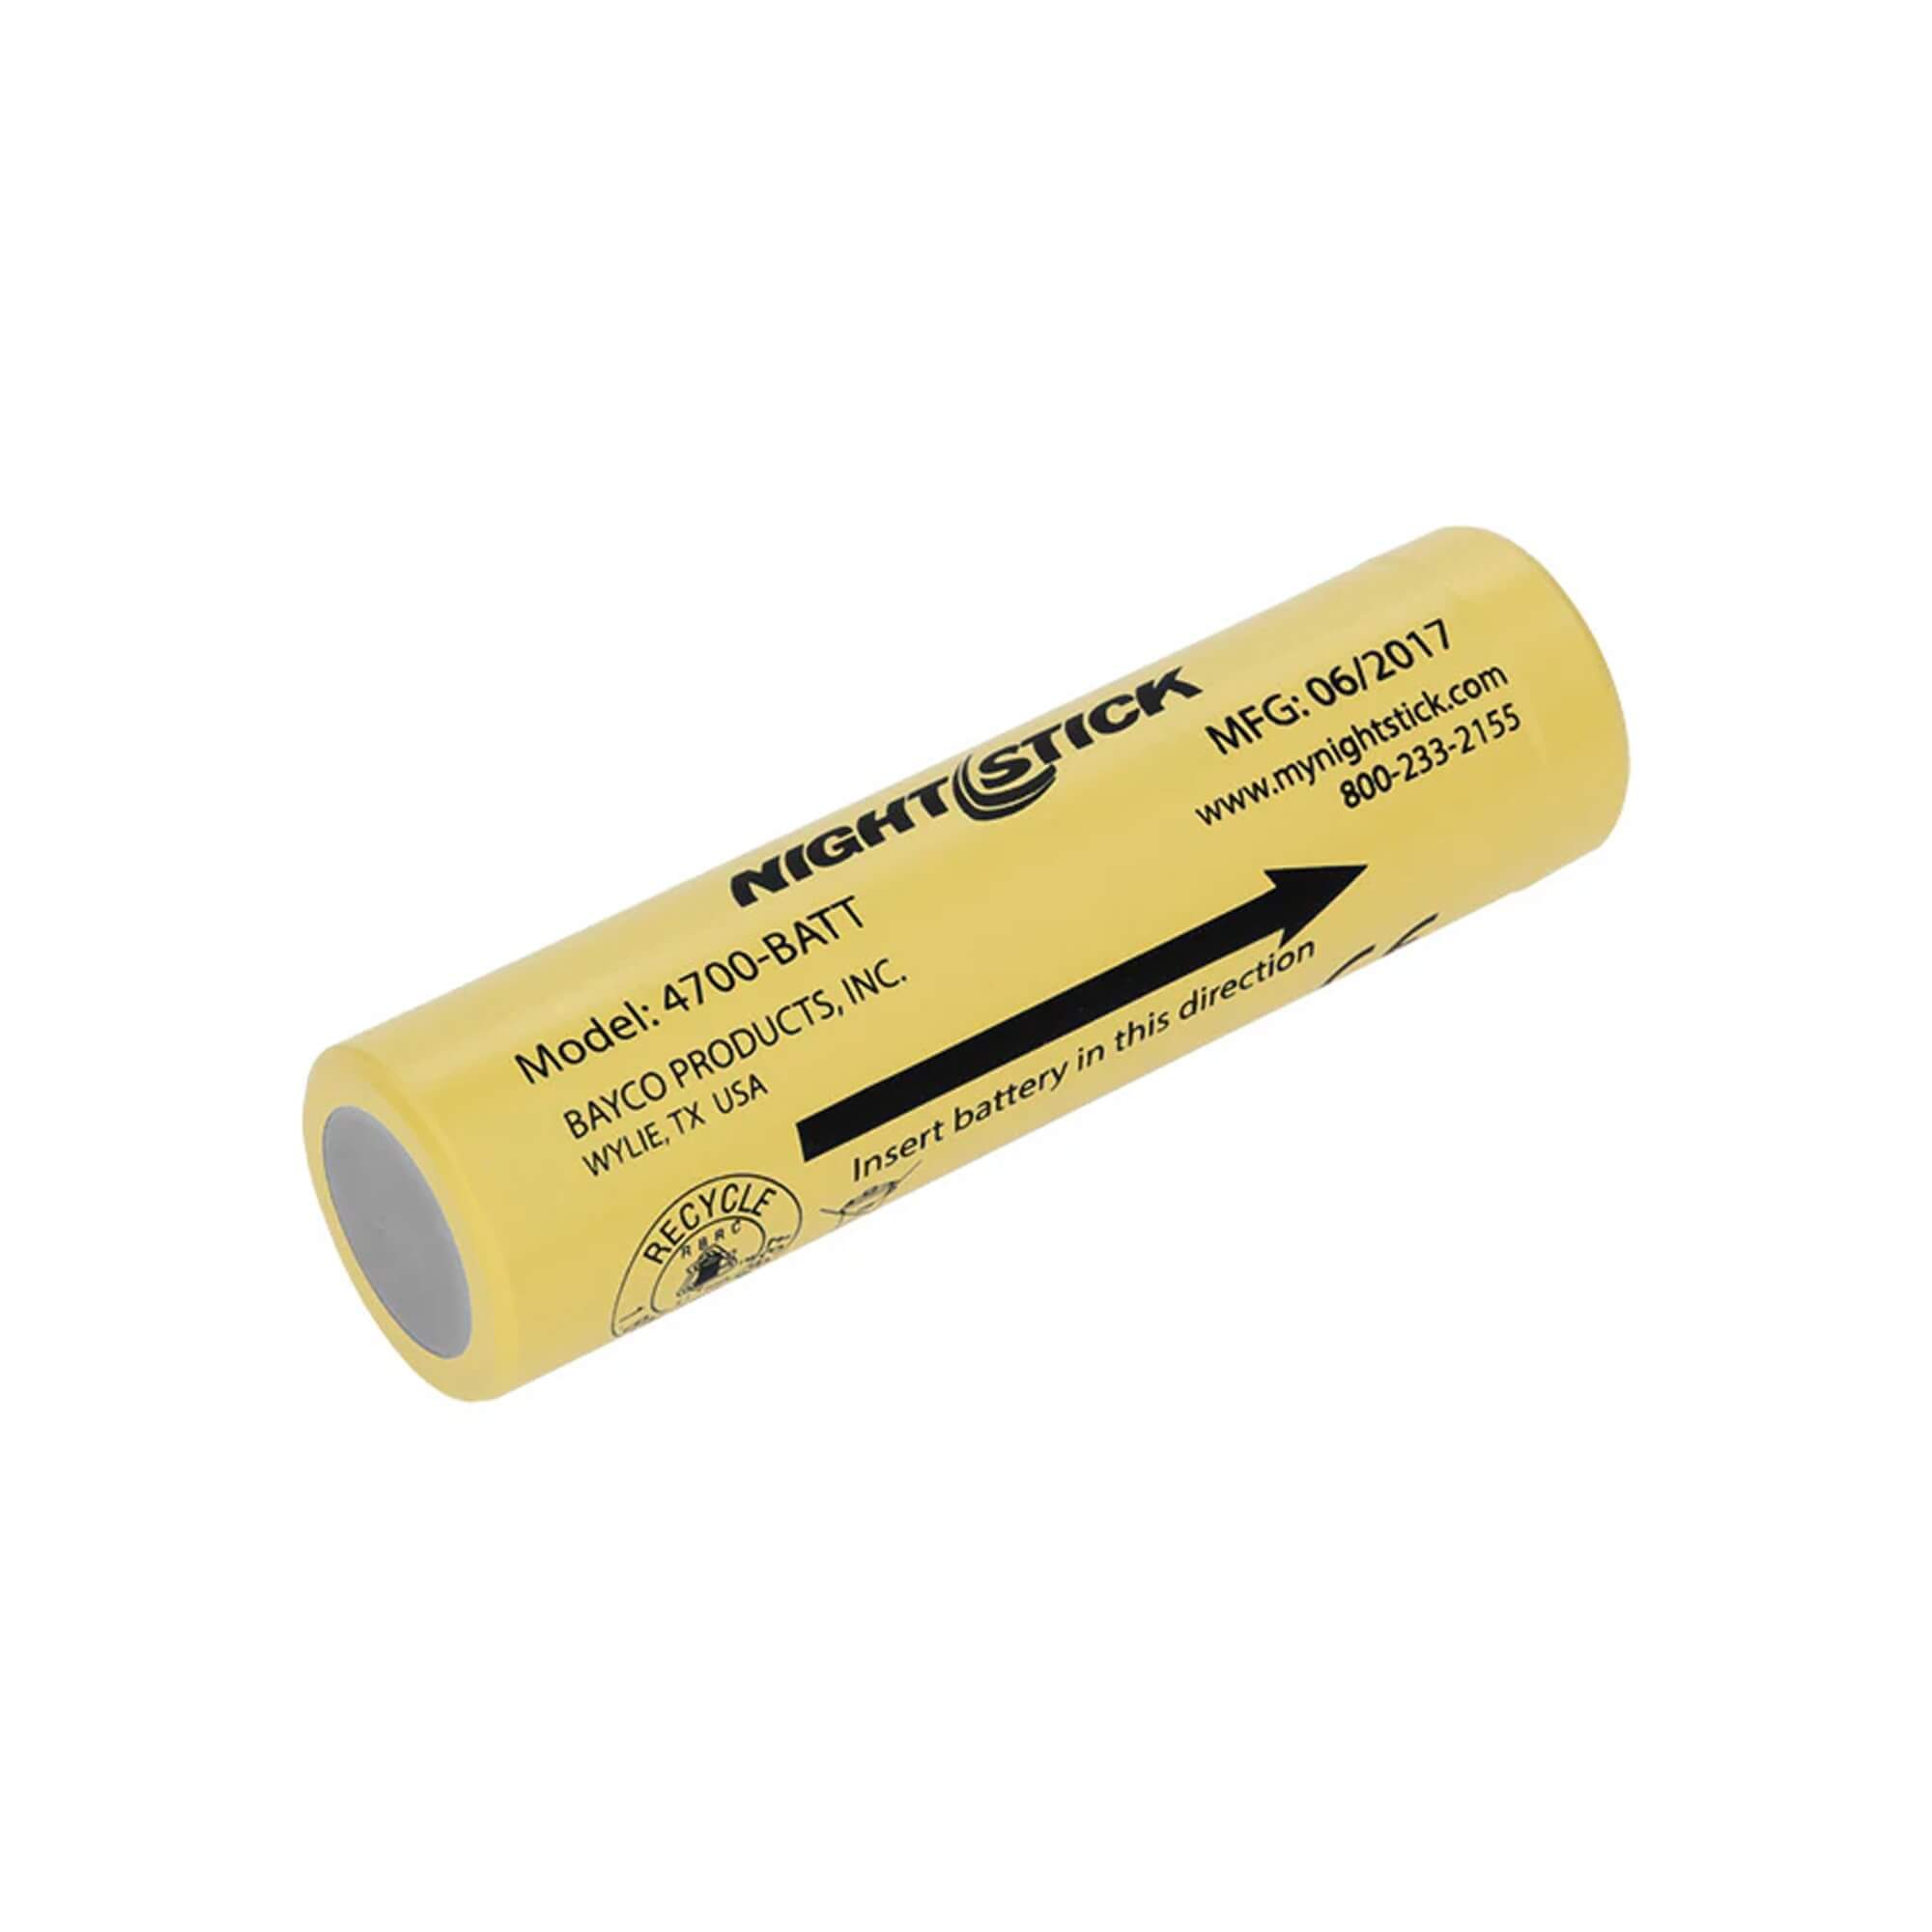 Lithium-ion Rechargeable Battery Nightstick 4700-BATT